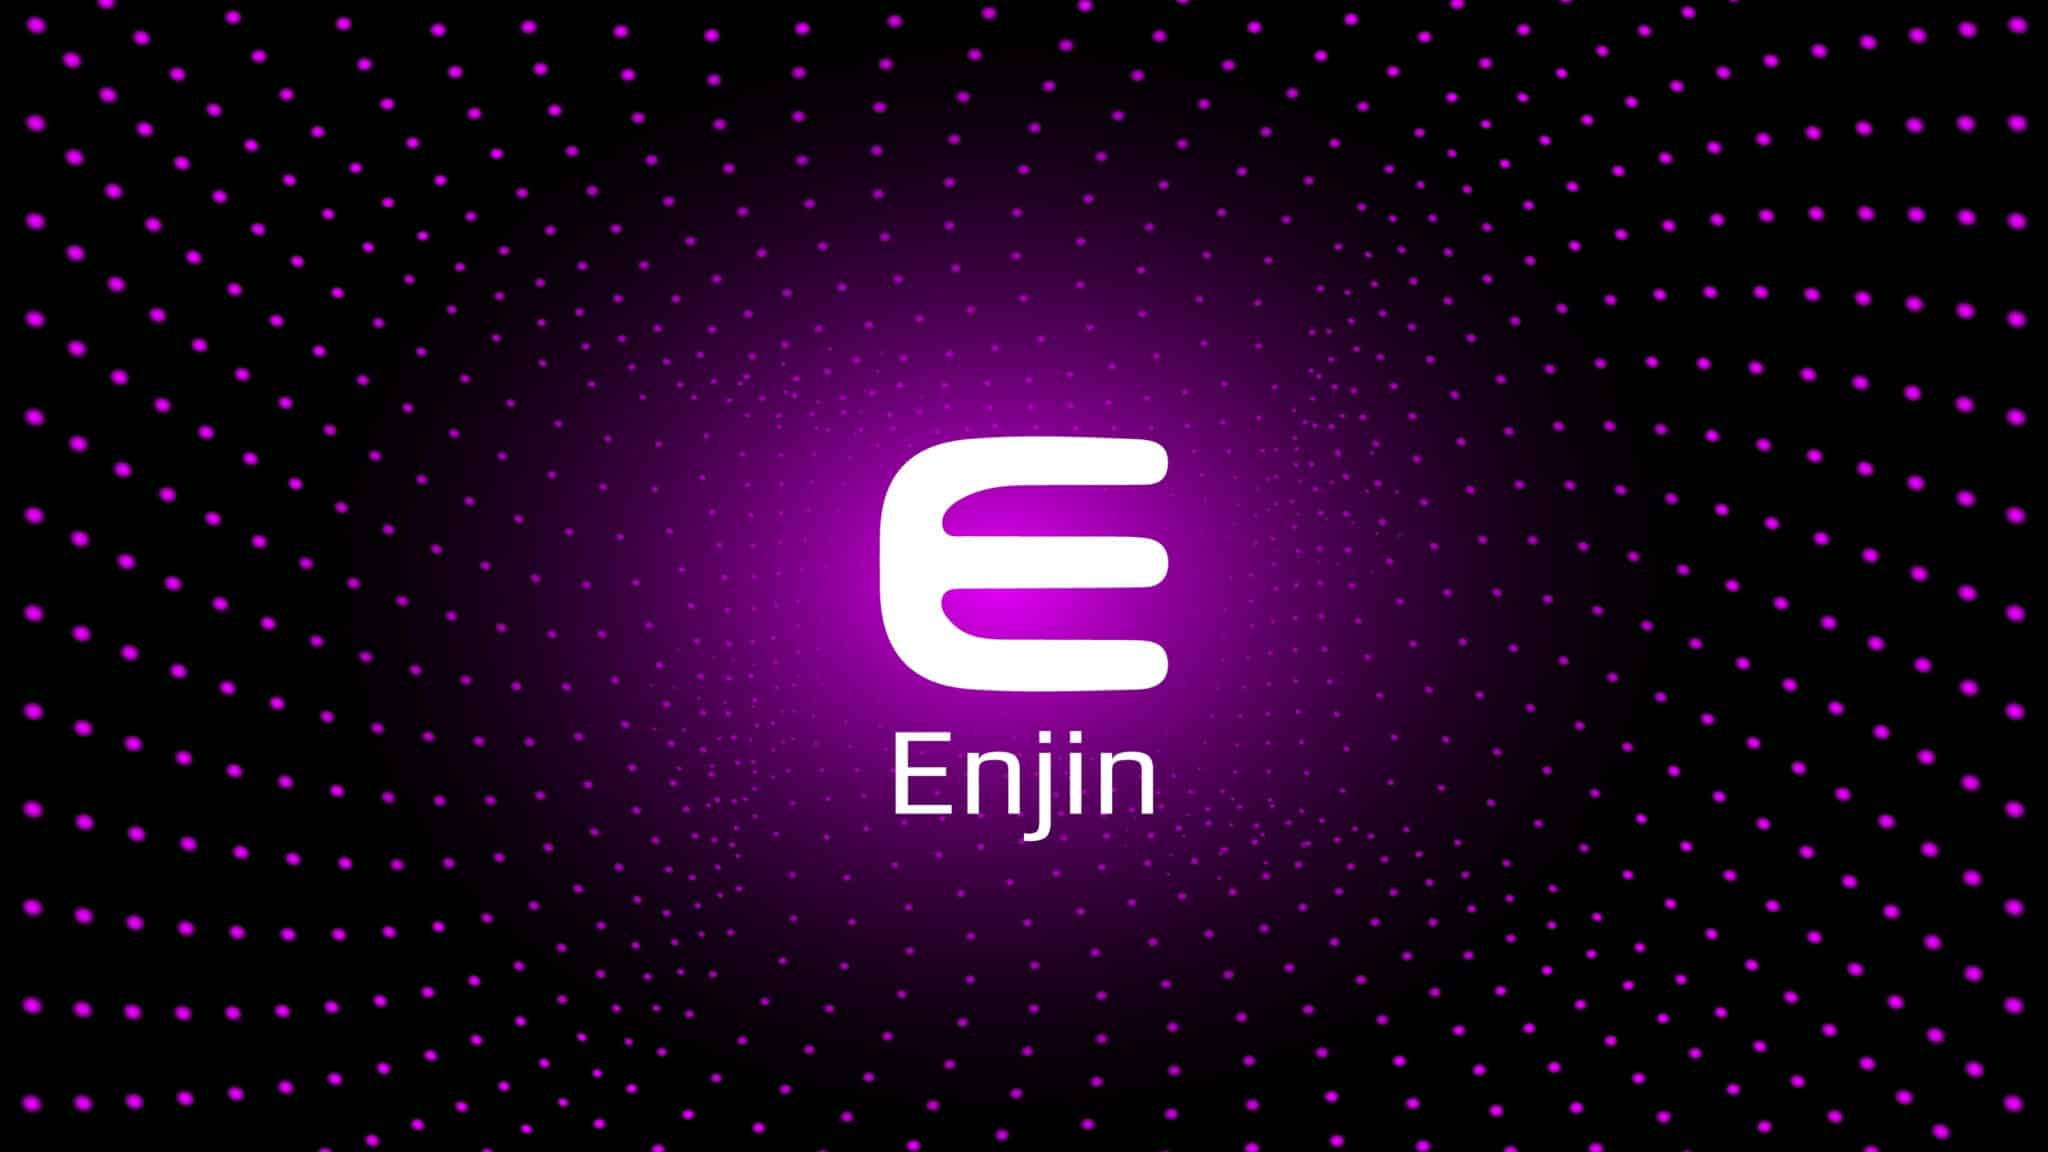 Illustration of the Enjin logo on a dark purple background.